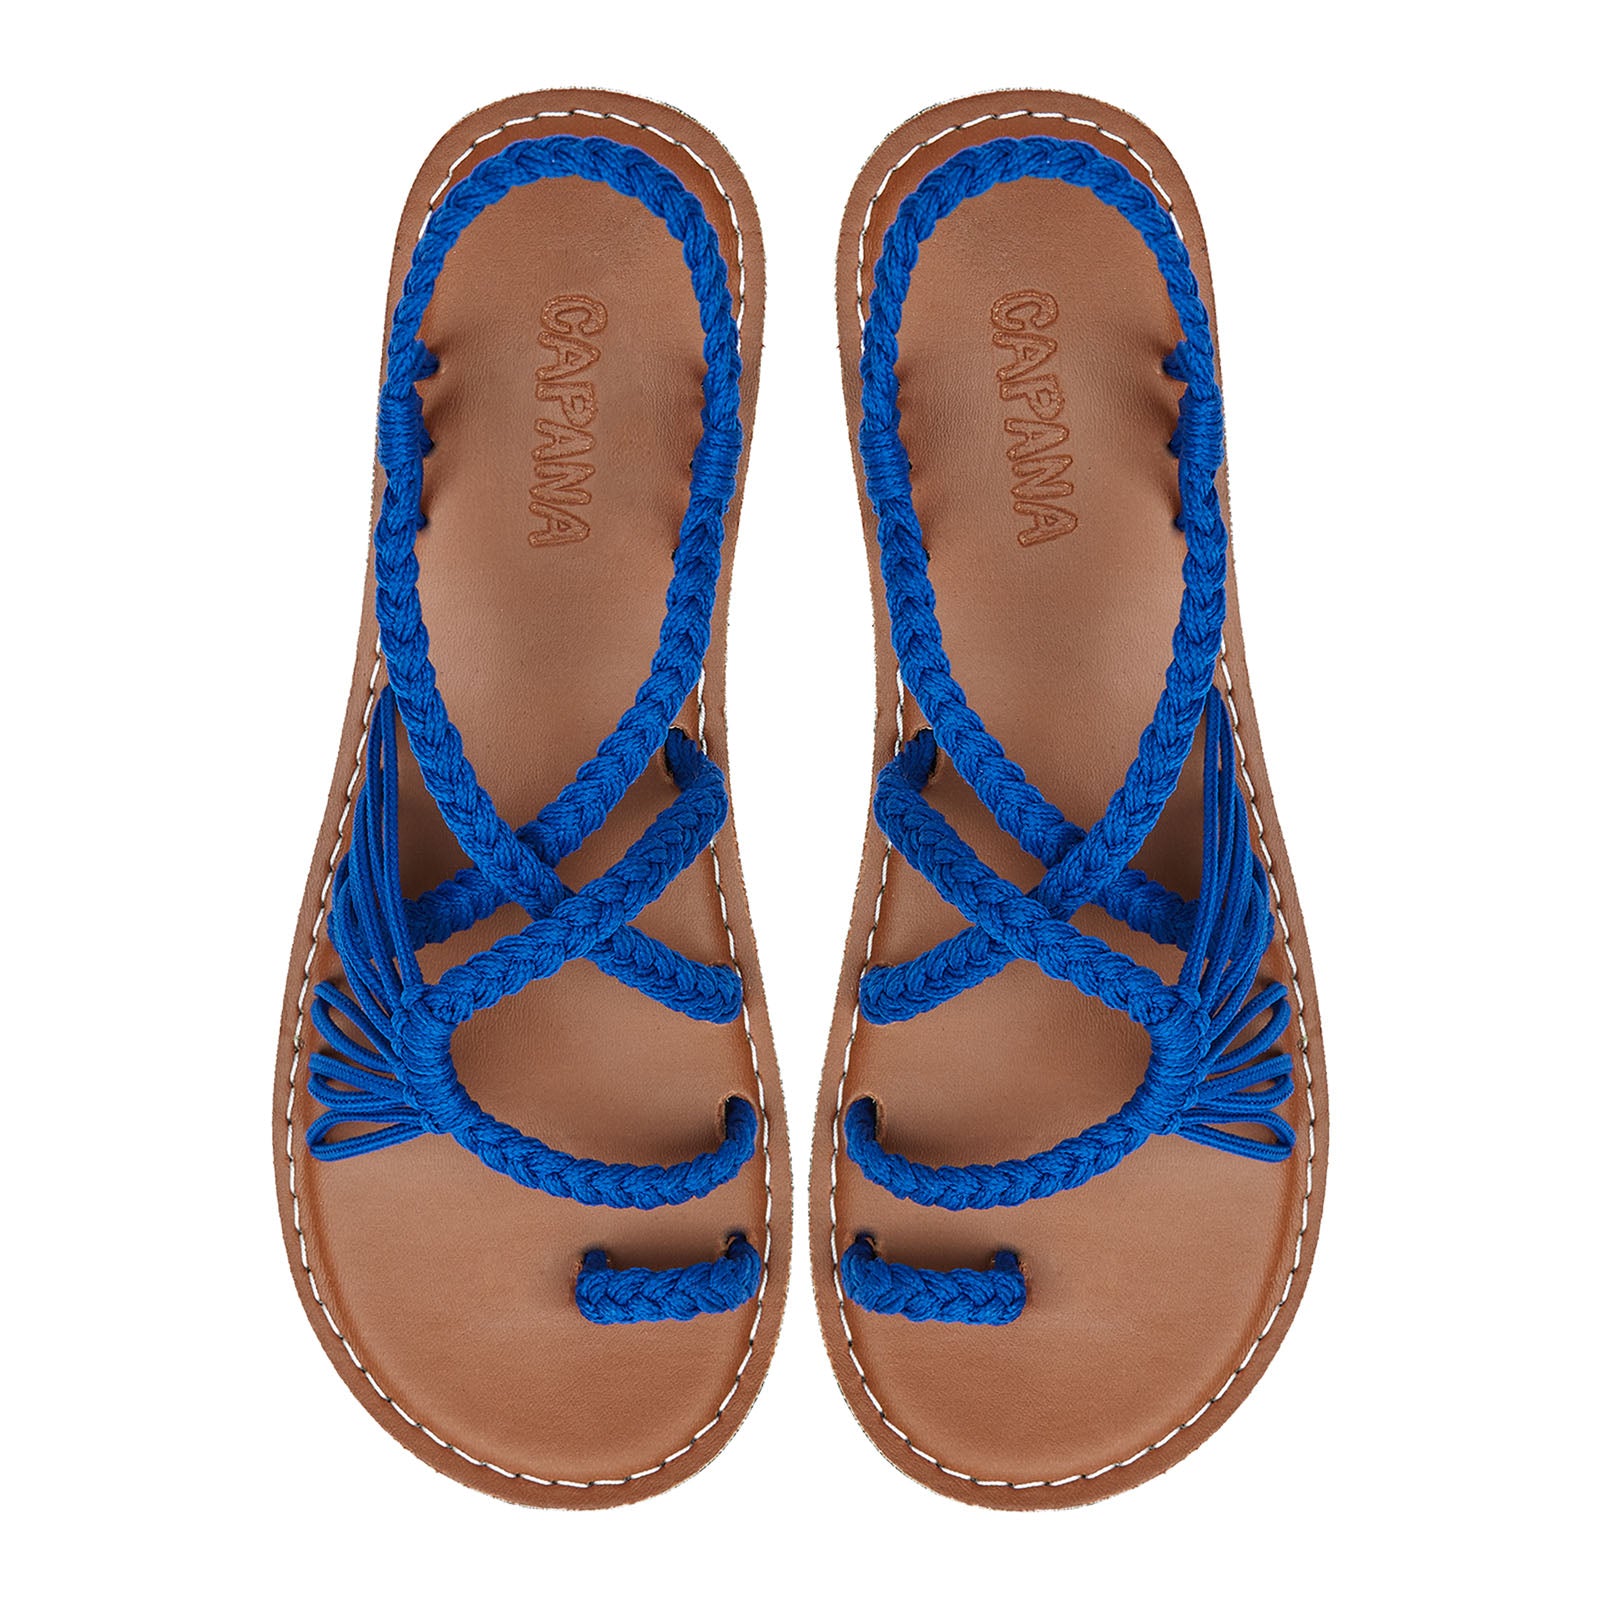 Commune Royal Blue Rope Sandals Navy loop design Flat sandals for women